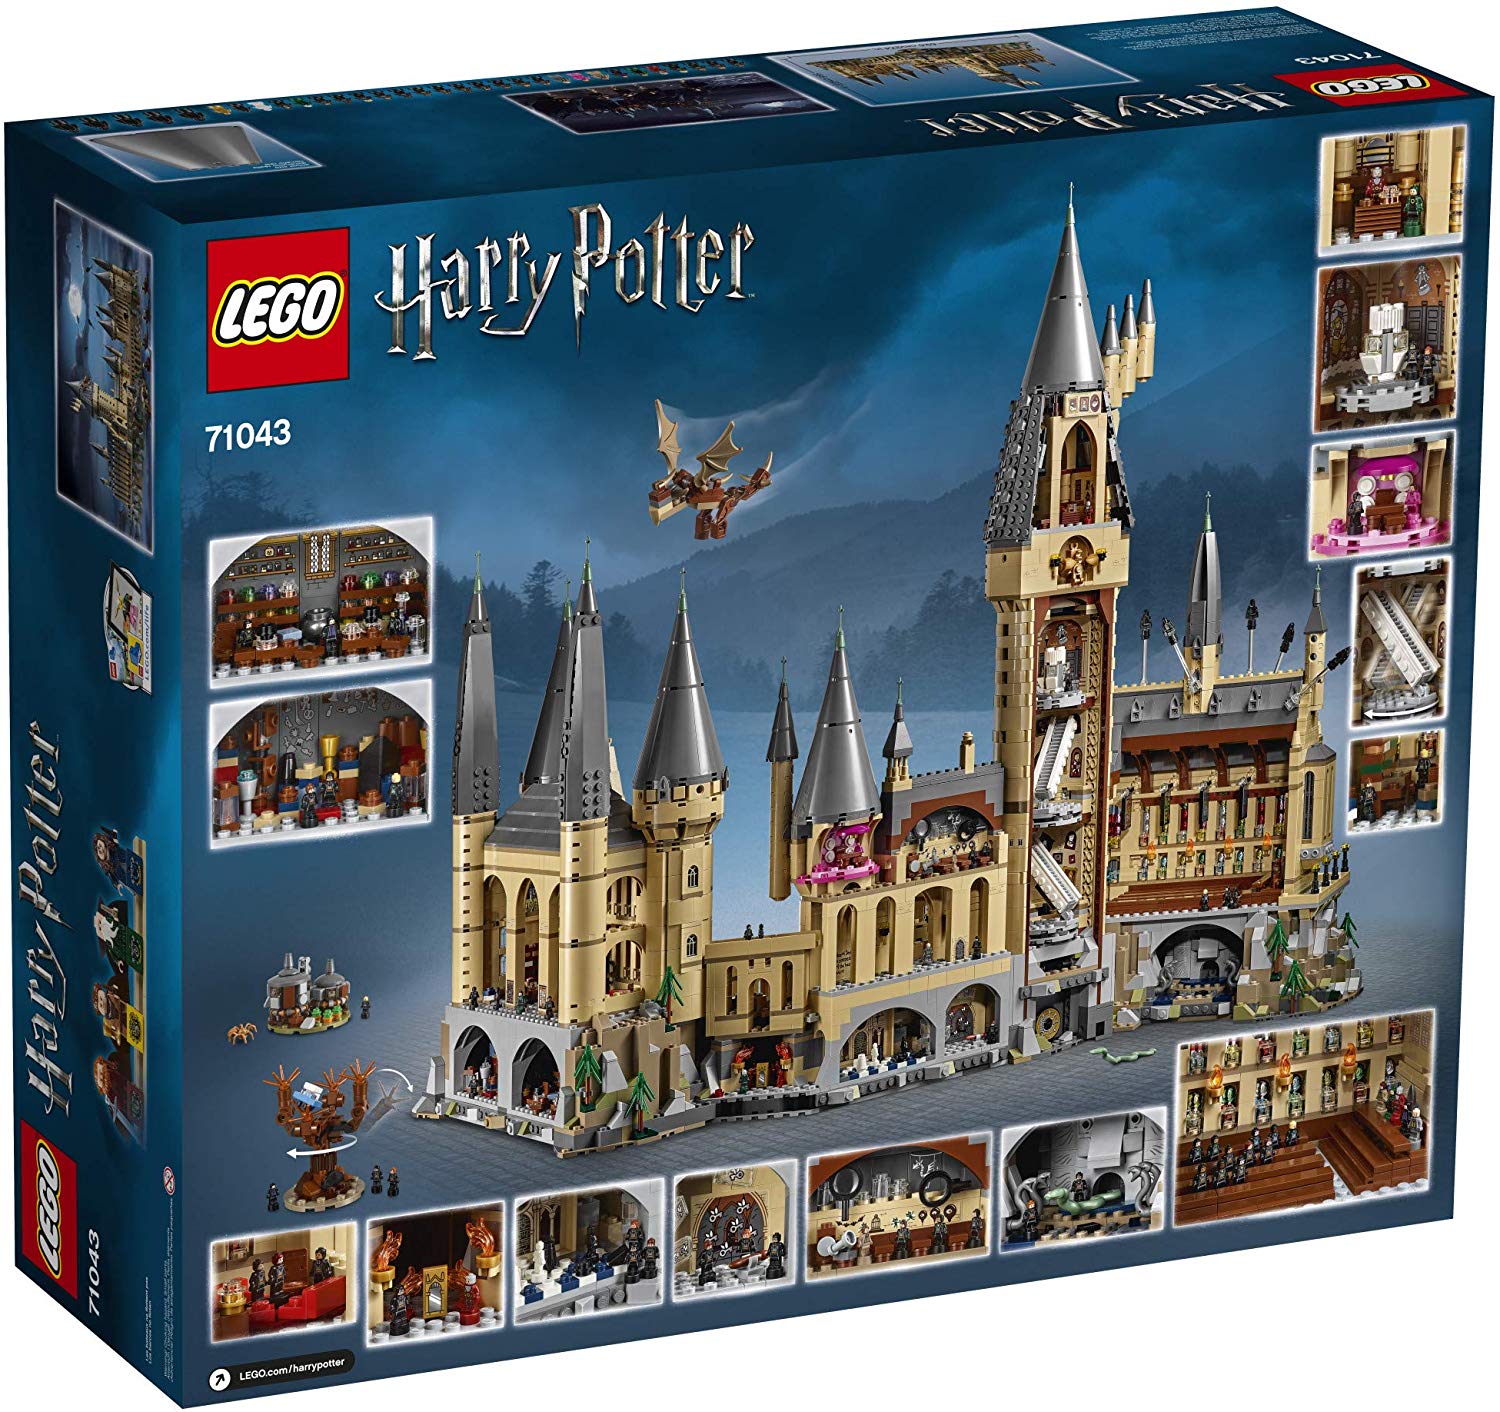 lego-harry-potter-hogwarts-castle-71043-building-kit-2019-6020-p